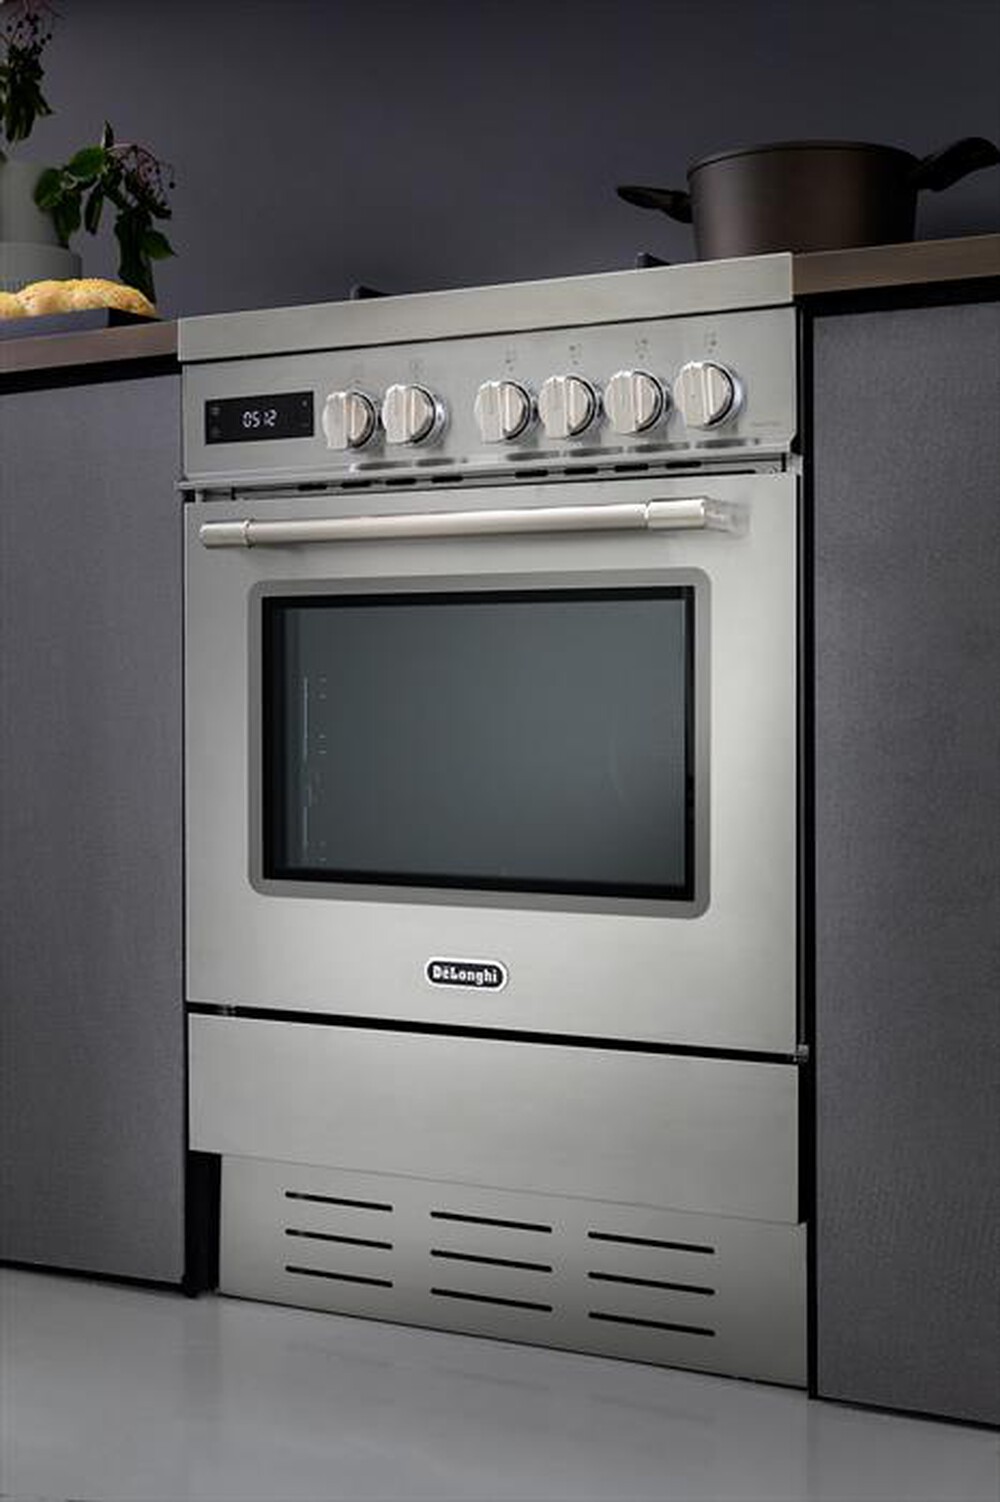 "DE LONGHI - Cucina a gas PRO 66 MX P Classe A-inox"